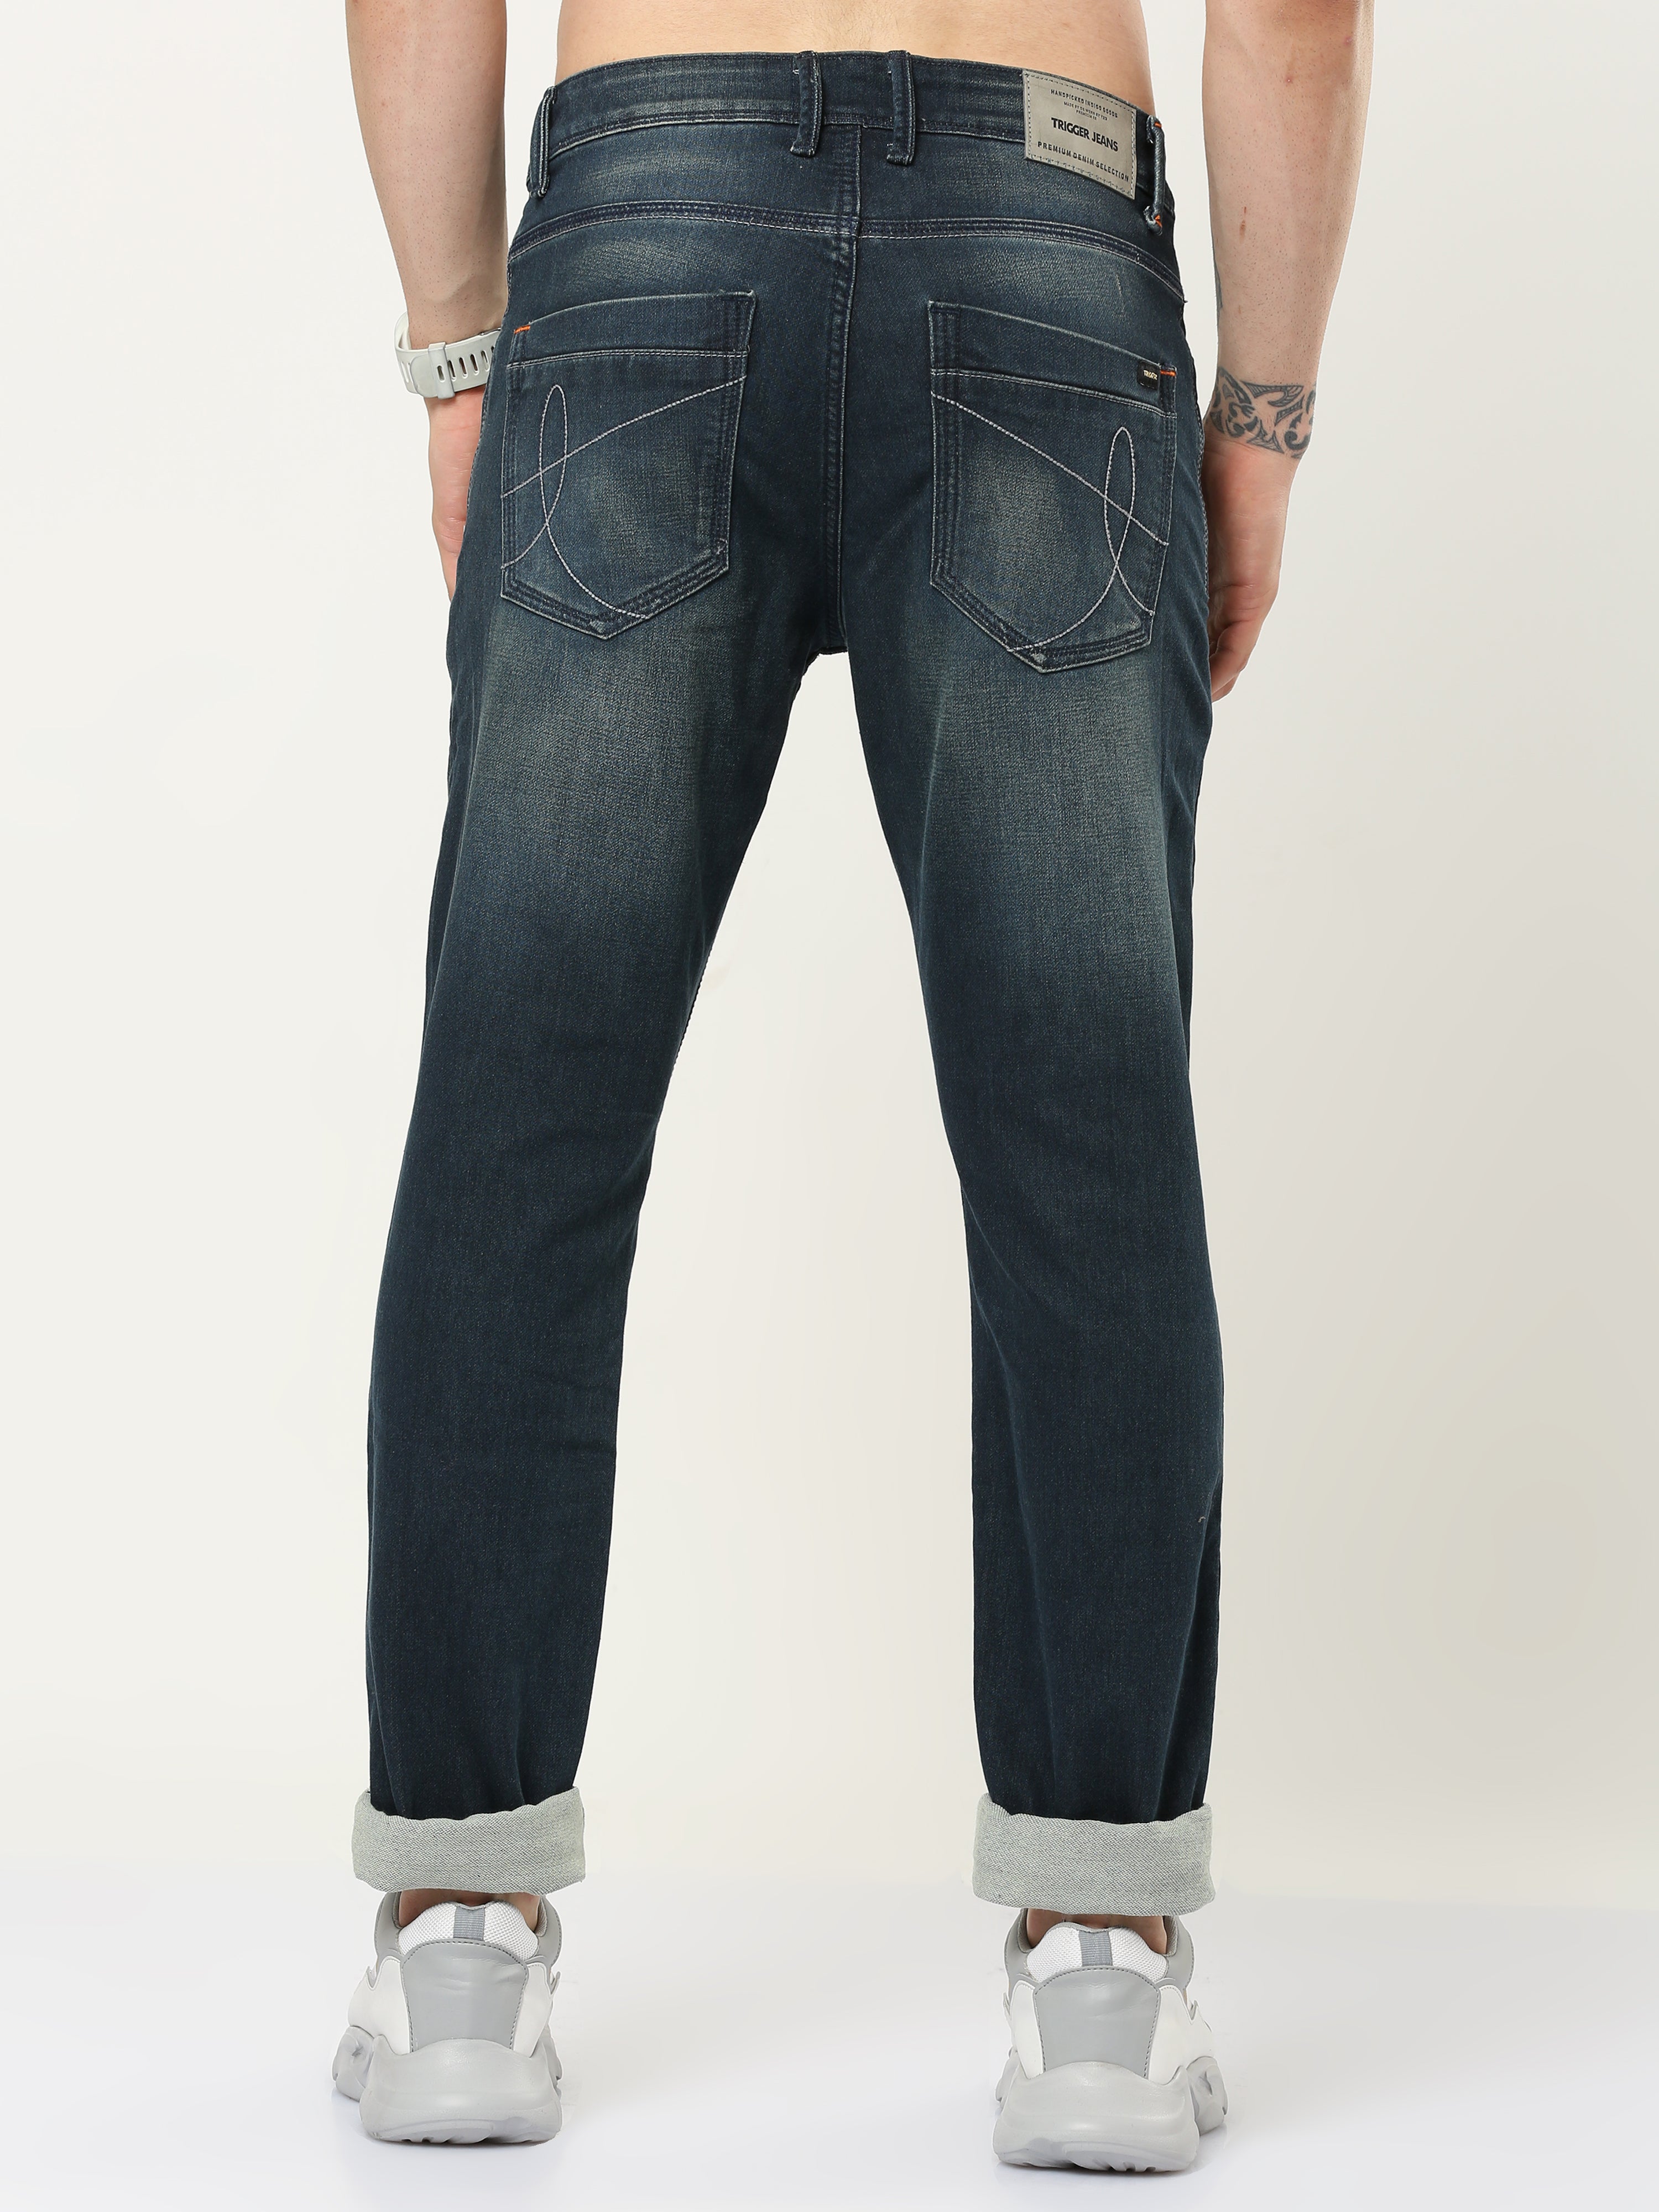 Men's Slim Fit Azure Blue Jeans